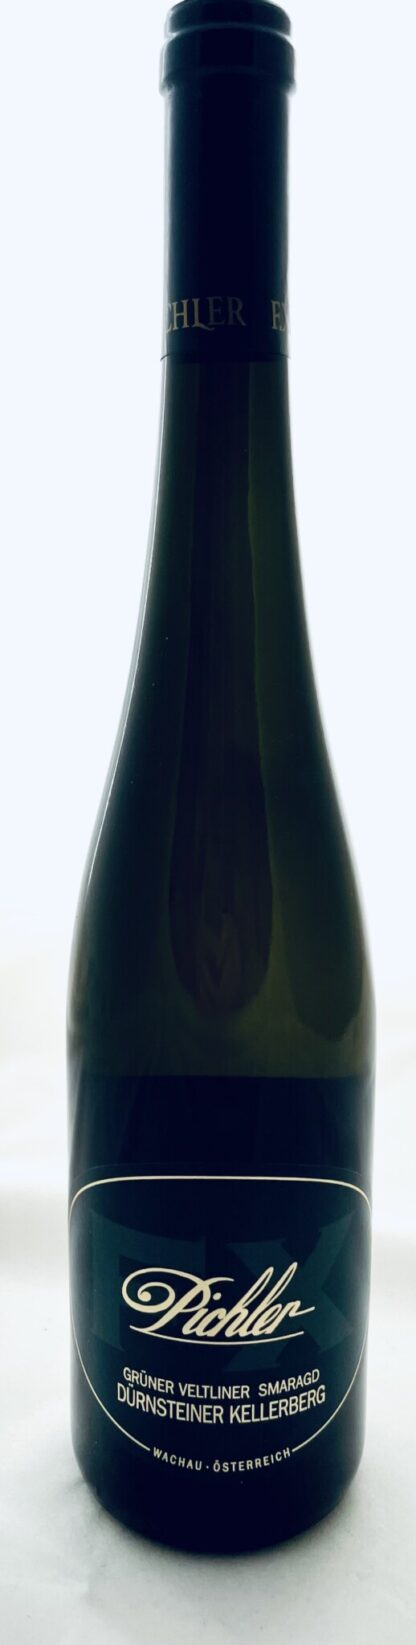 FX Pichler grüner Veltliner Smaragd Dürnsteiner Kellerberg 2012 Flasche